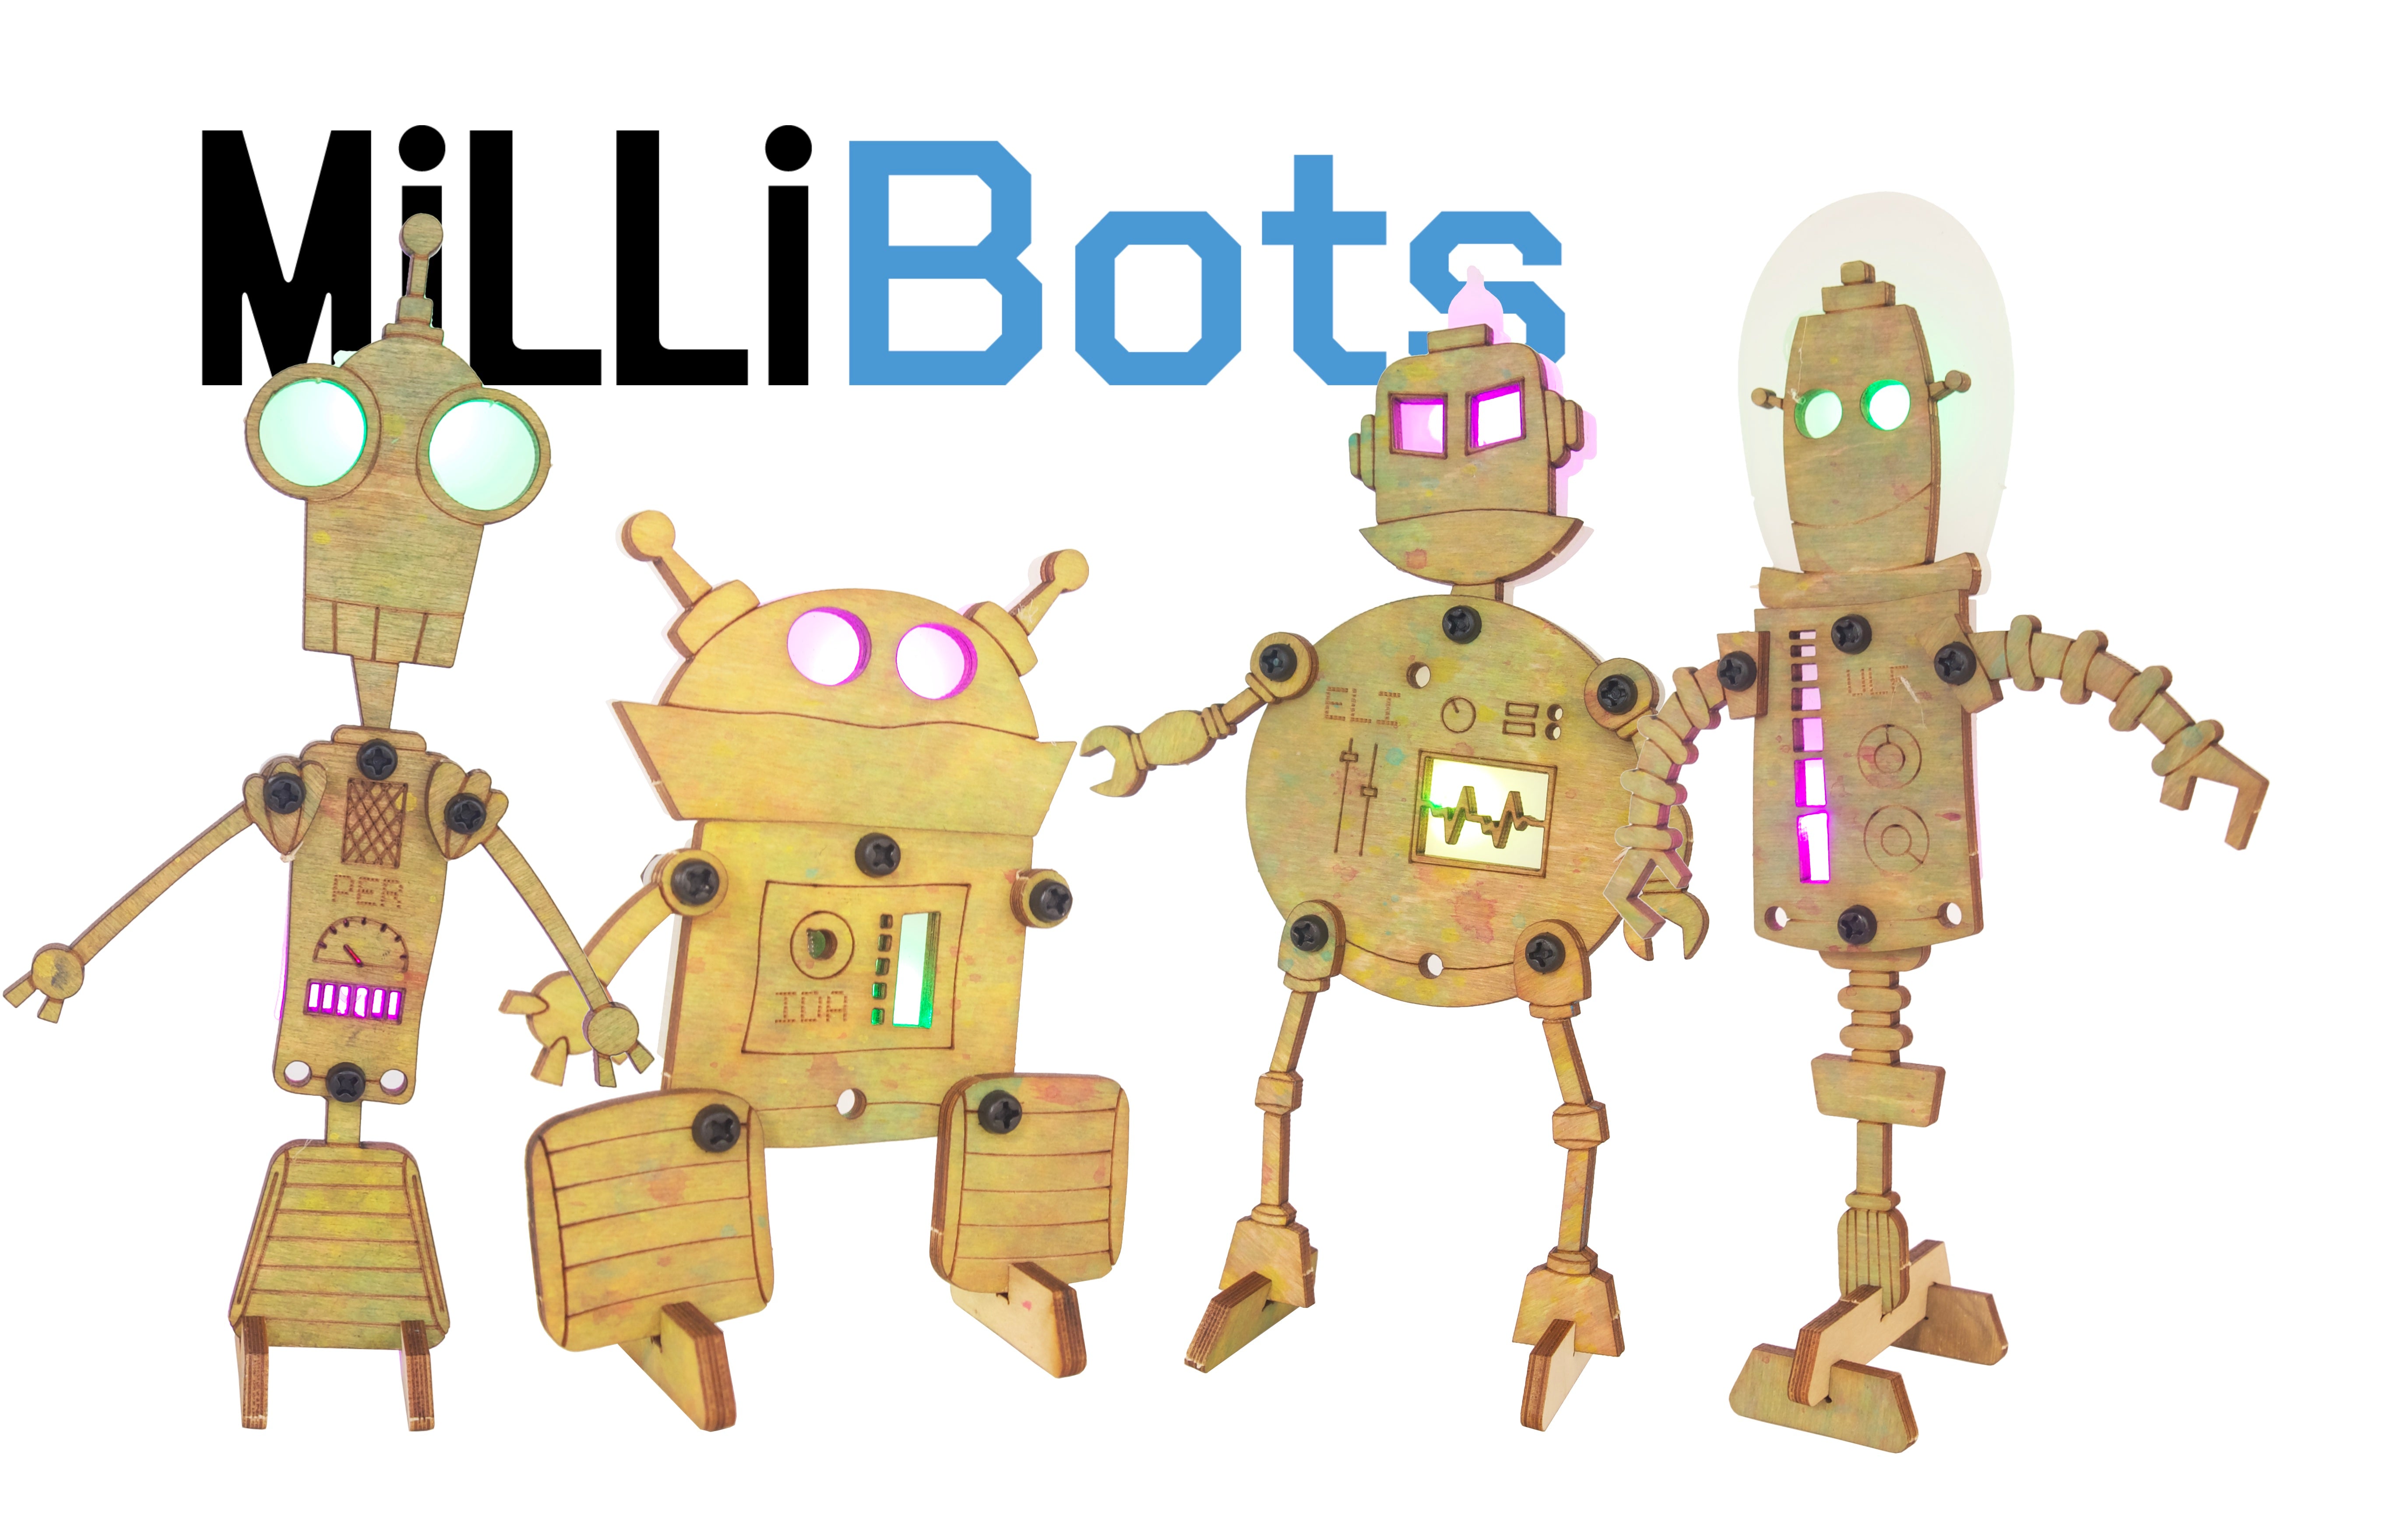 Millibots - robots with LED lights